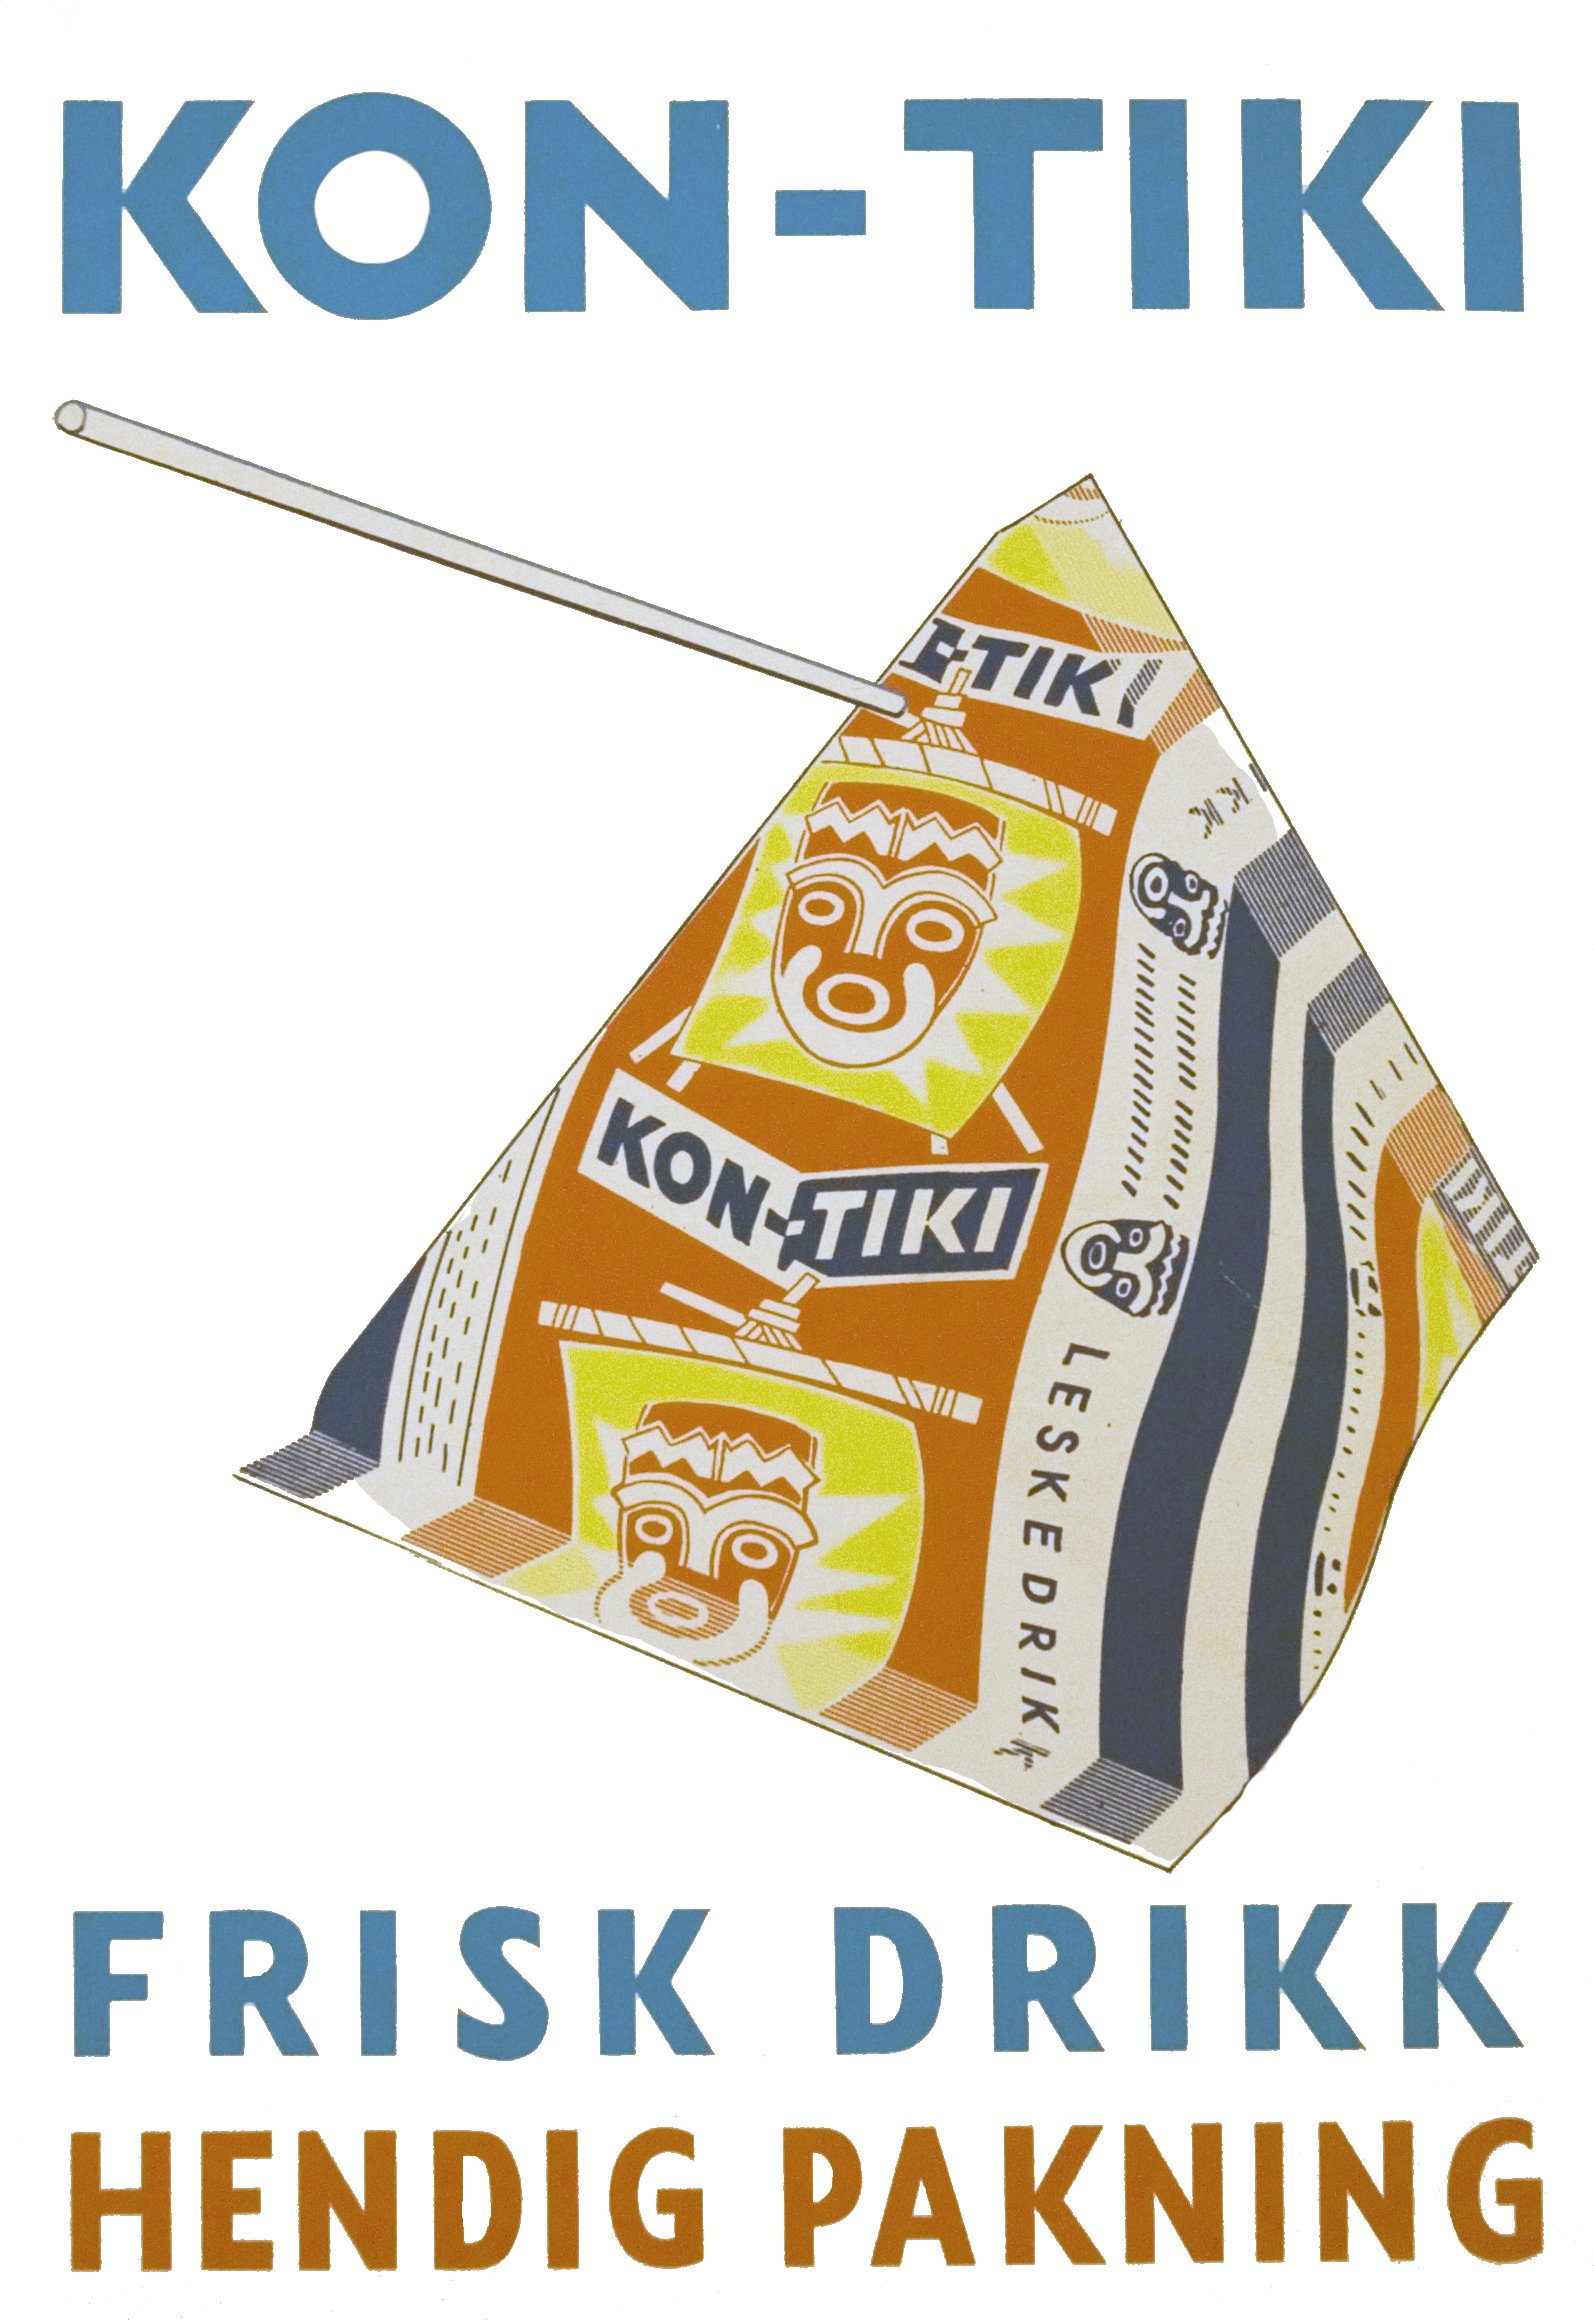 Soft-drink called Kon-Tiki